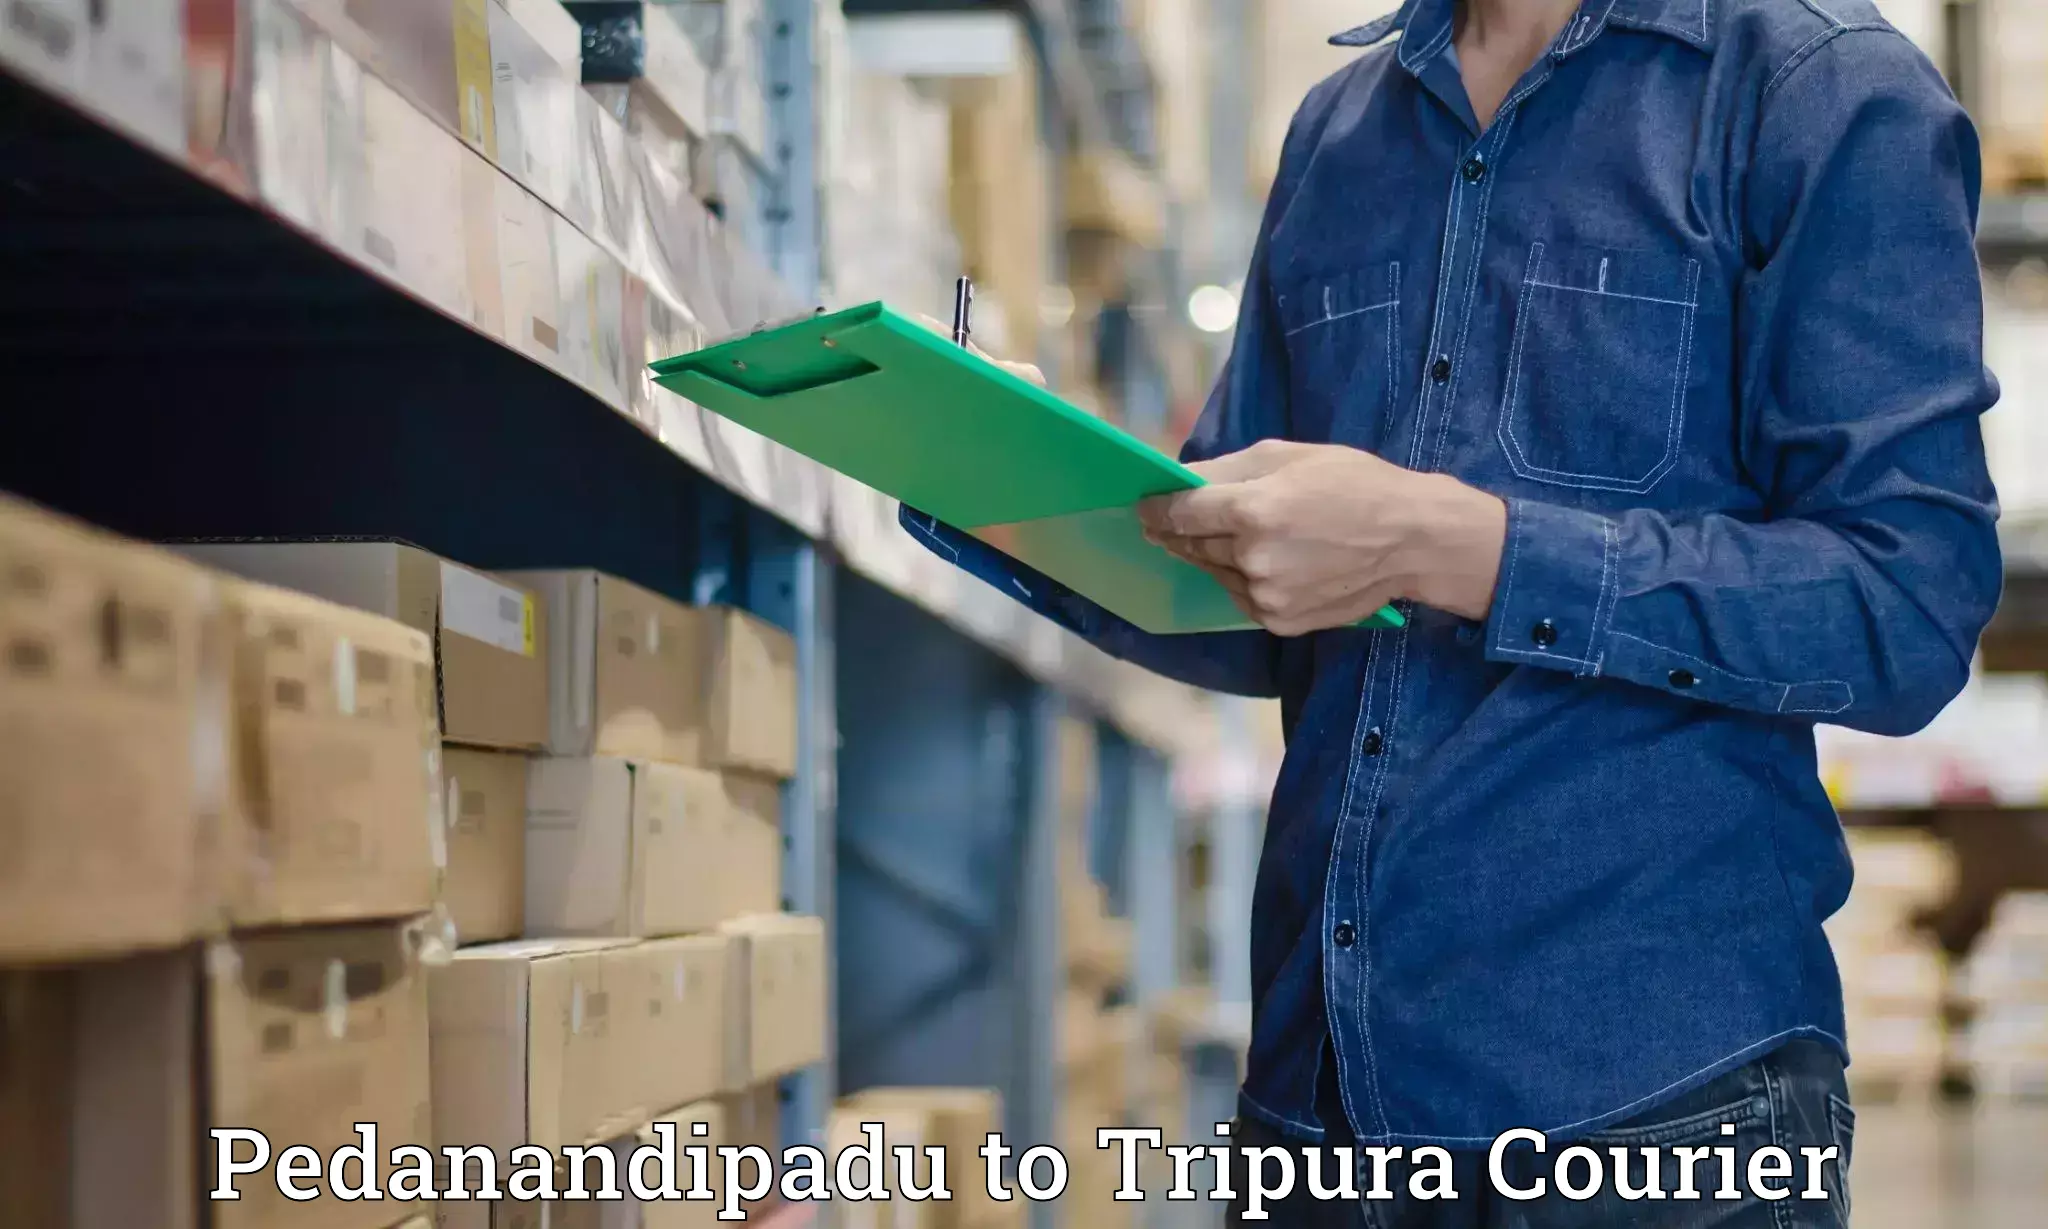 Quick dispatch service Pedanandipadu to North Tripura